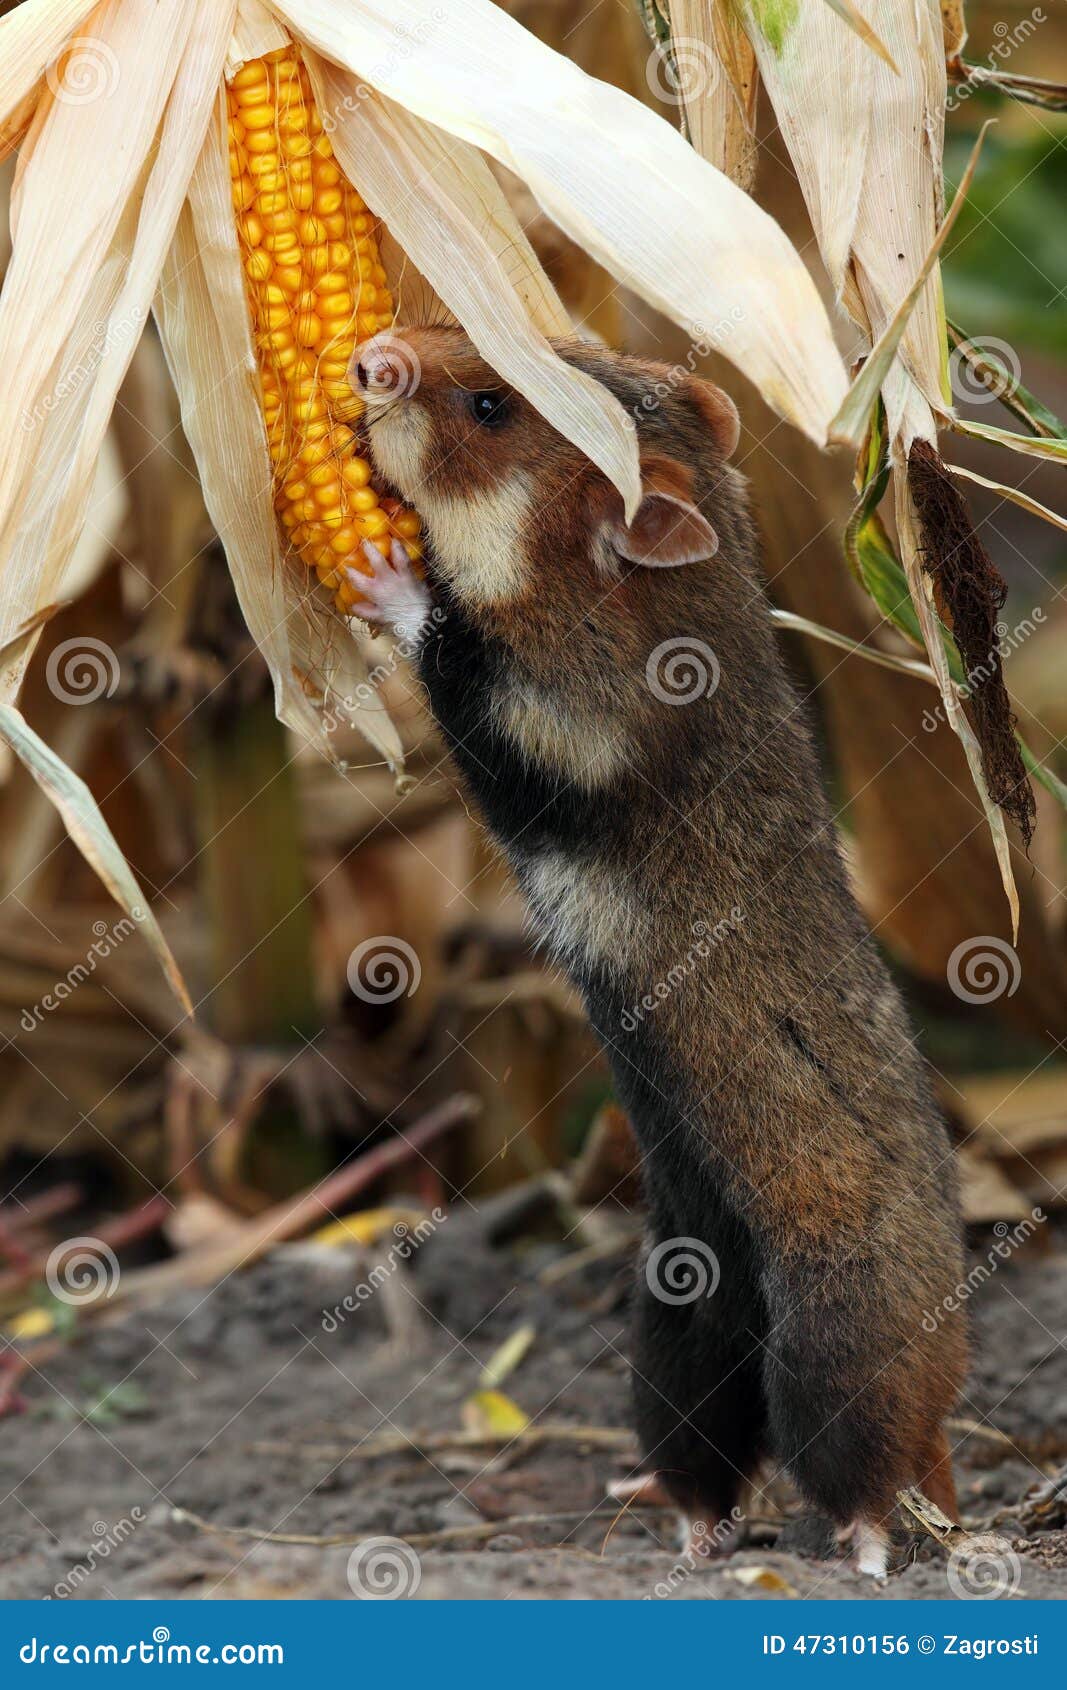 field hamster gather maize